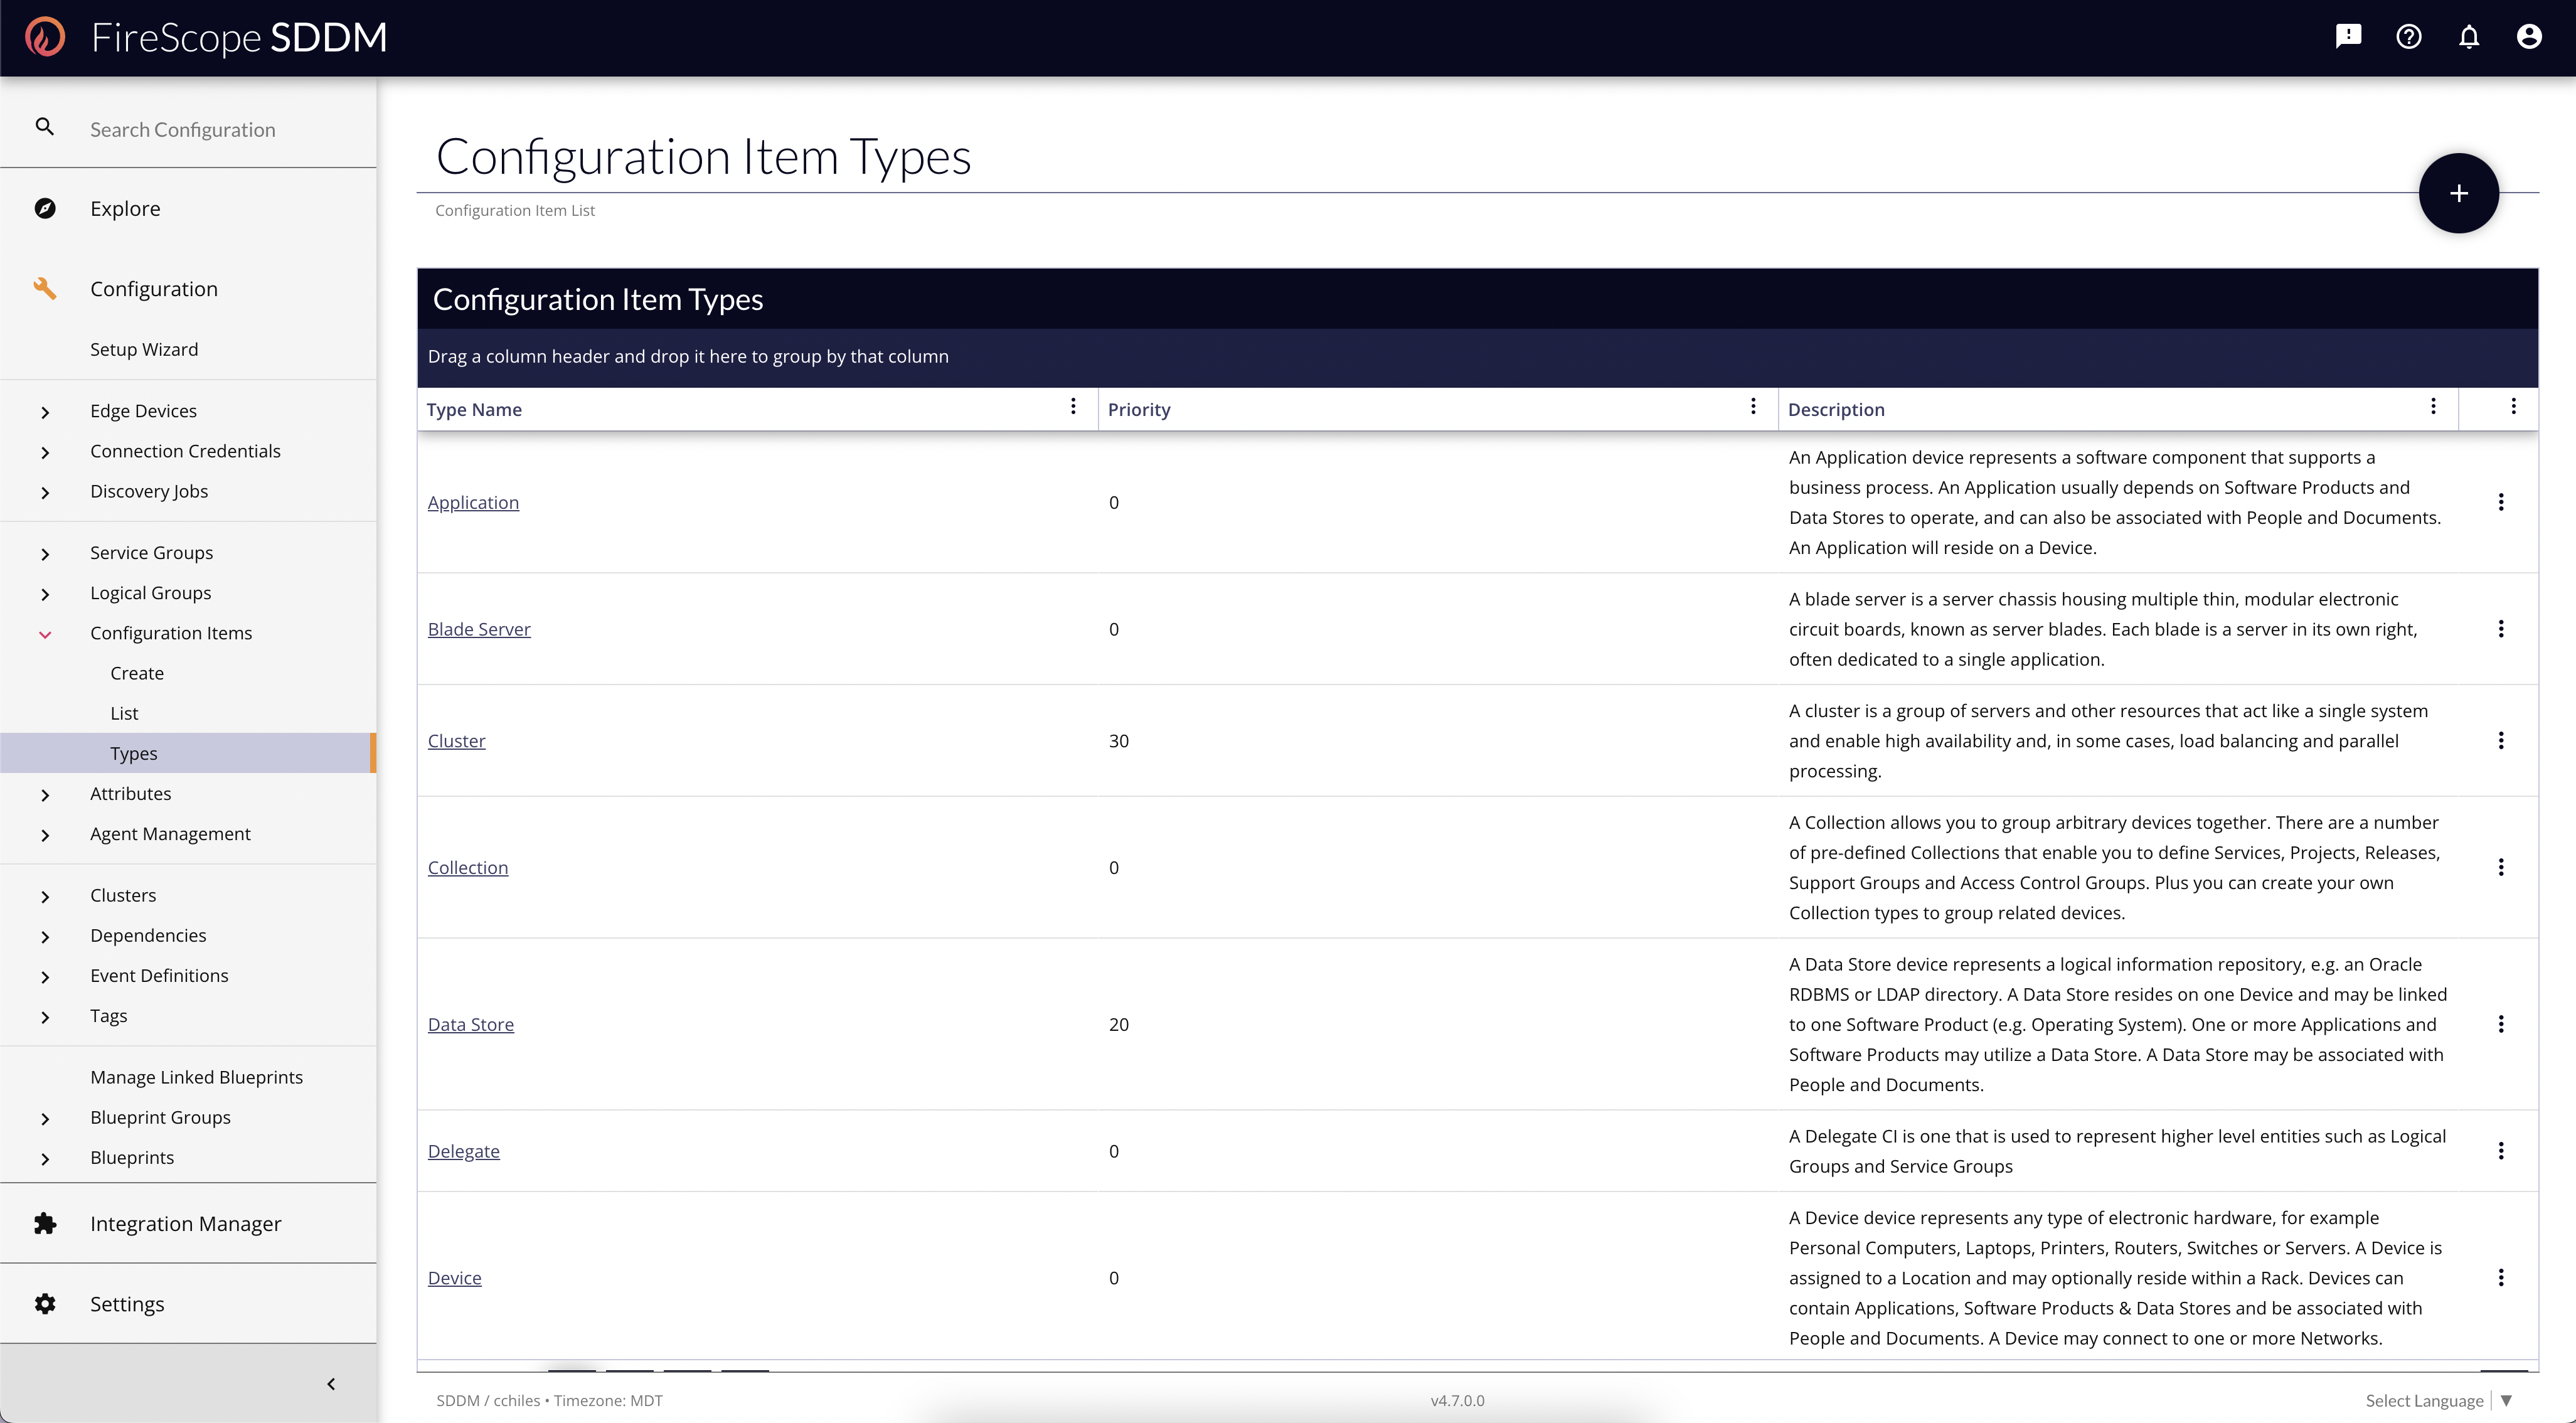 Configuration Item Types List